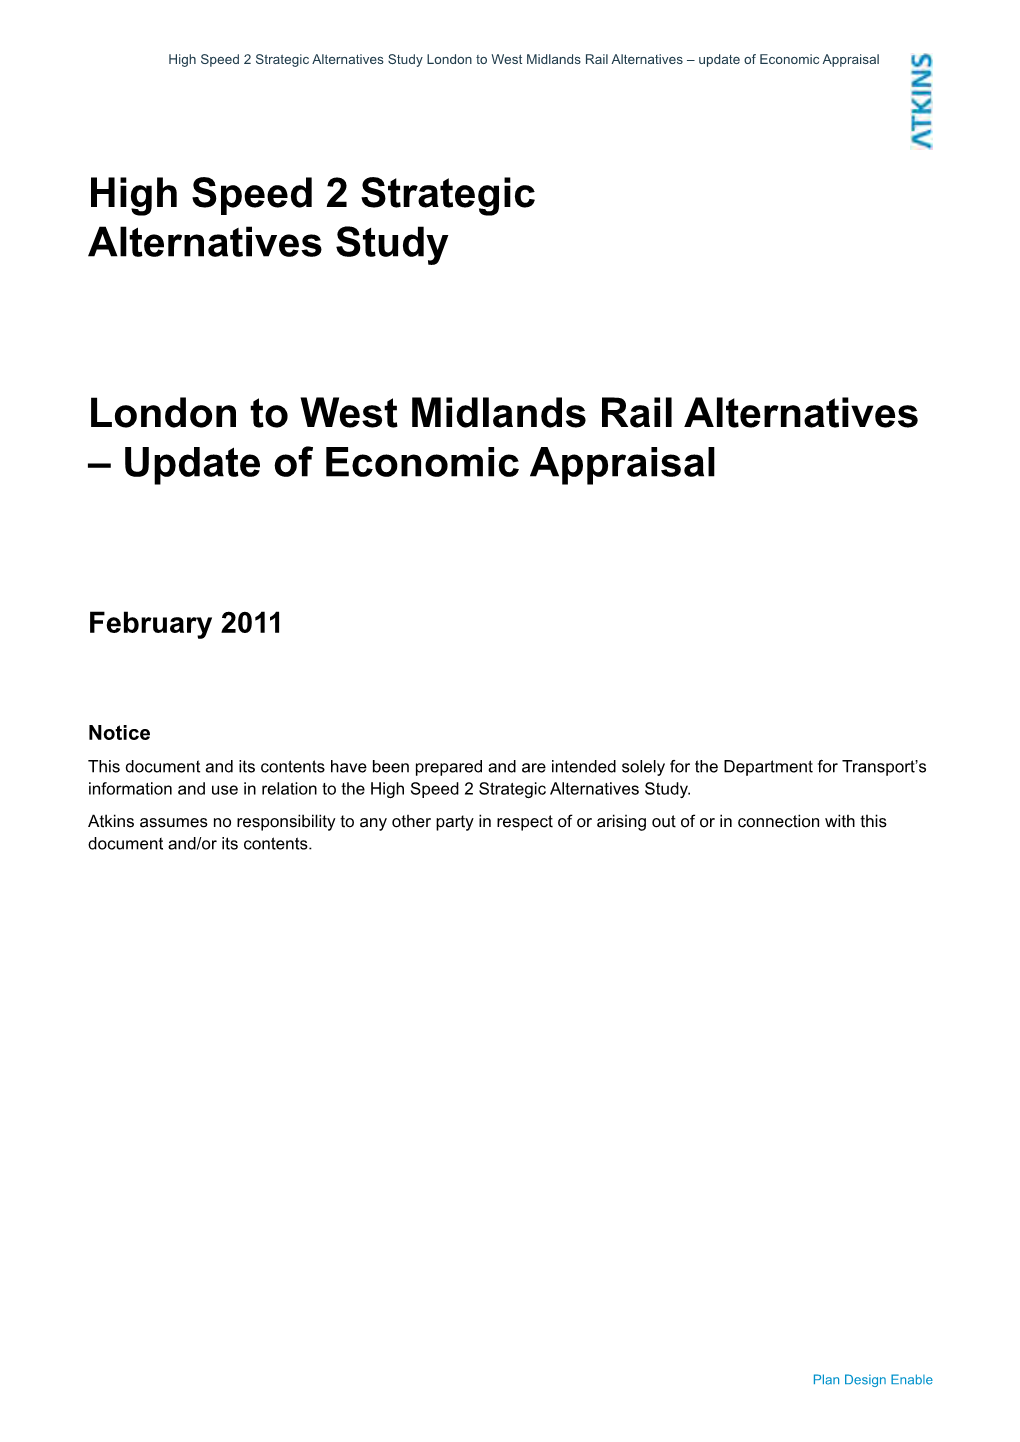 High Speed 2 Strategic Alternatives Study London to West Midlands Rail Alternatives – Update of Economic Appraisal